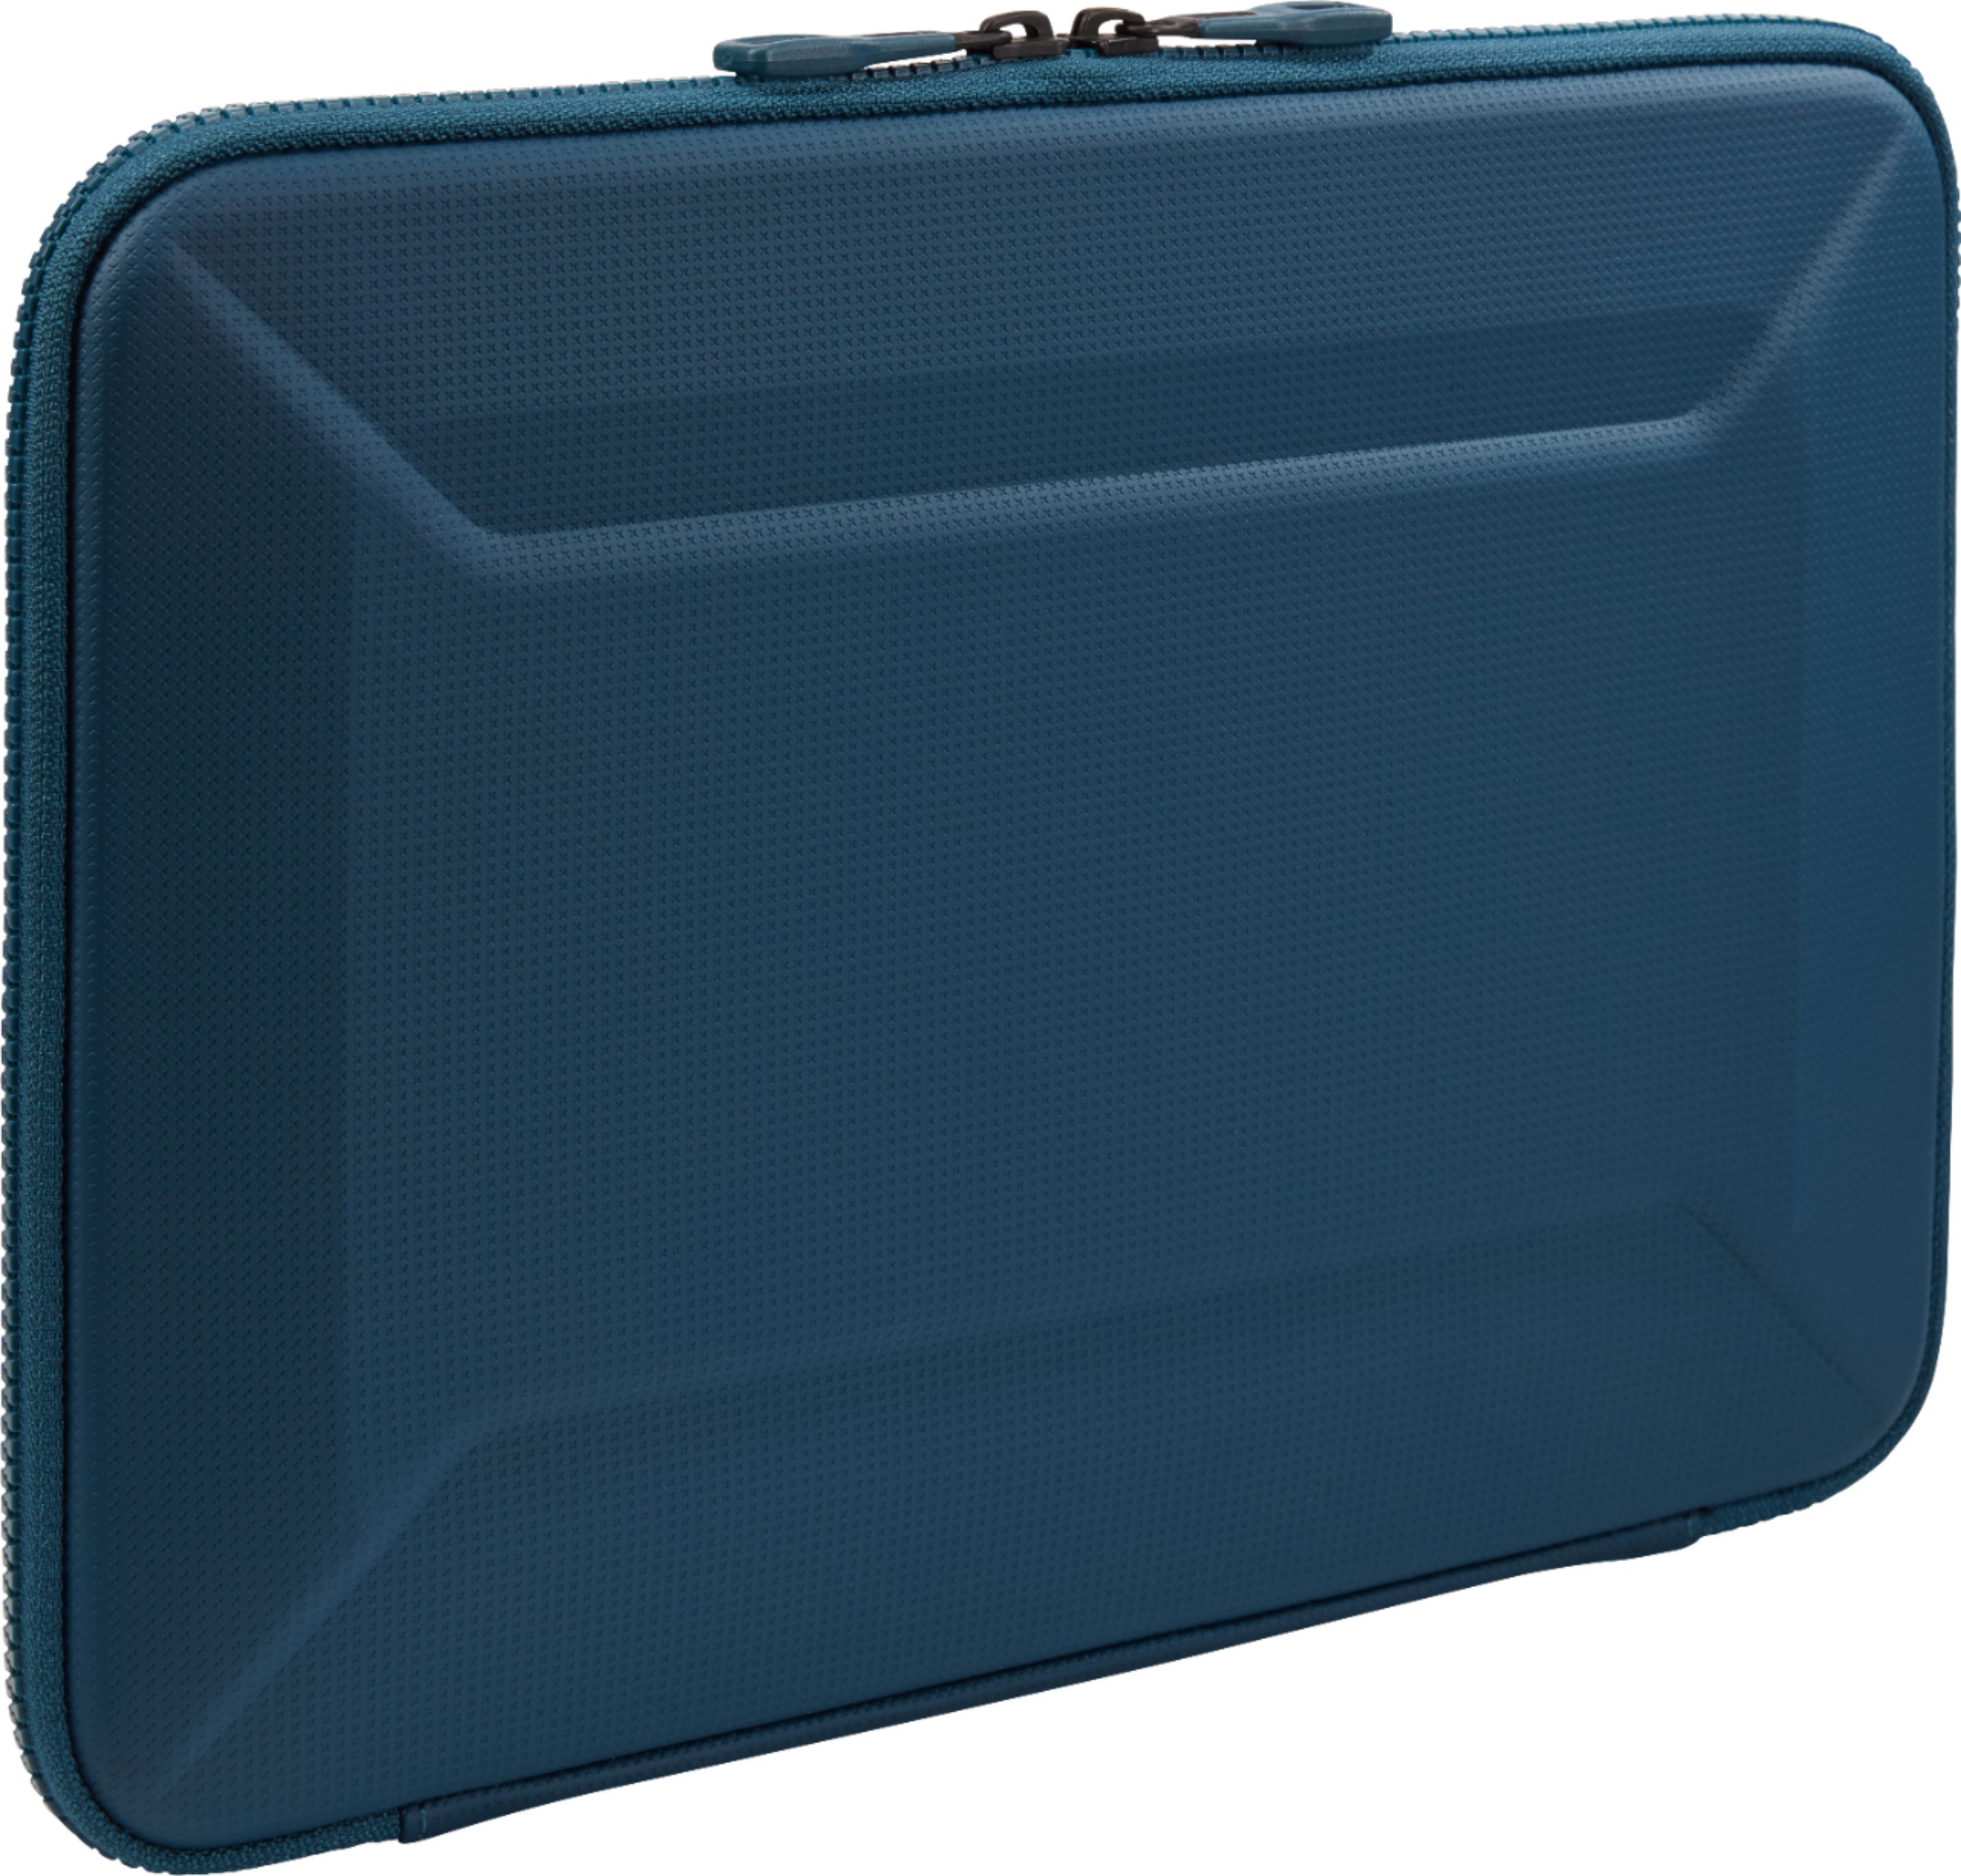 Thule Gauntlet 4.0 Sleeve/Case for 13”/13.3” Apple MacBook Pro, Apple Air, PCs/Laptops Tablets up to 12” Blue TGSE2355BLU Best Buy